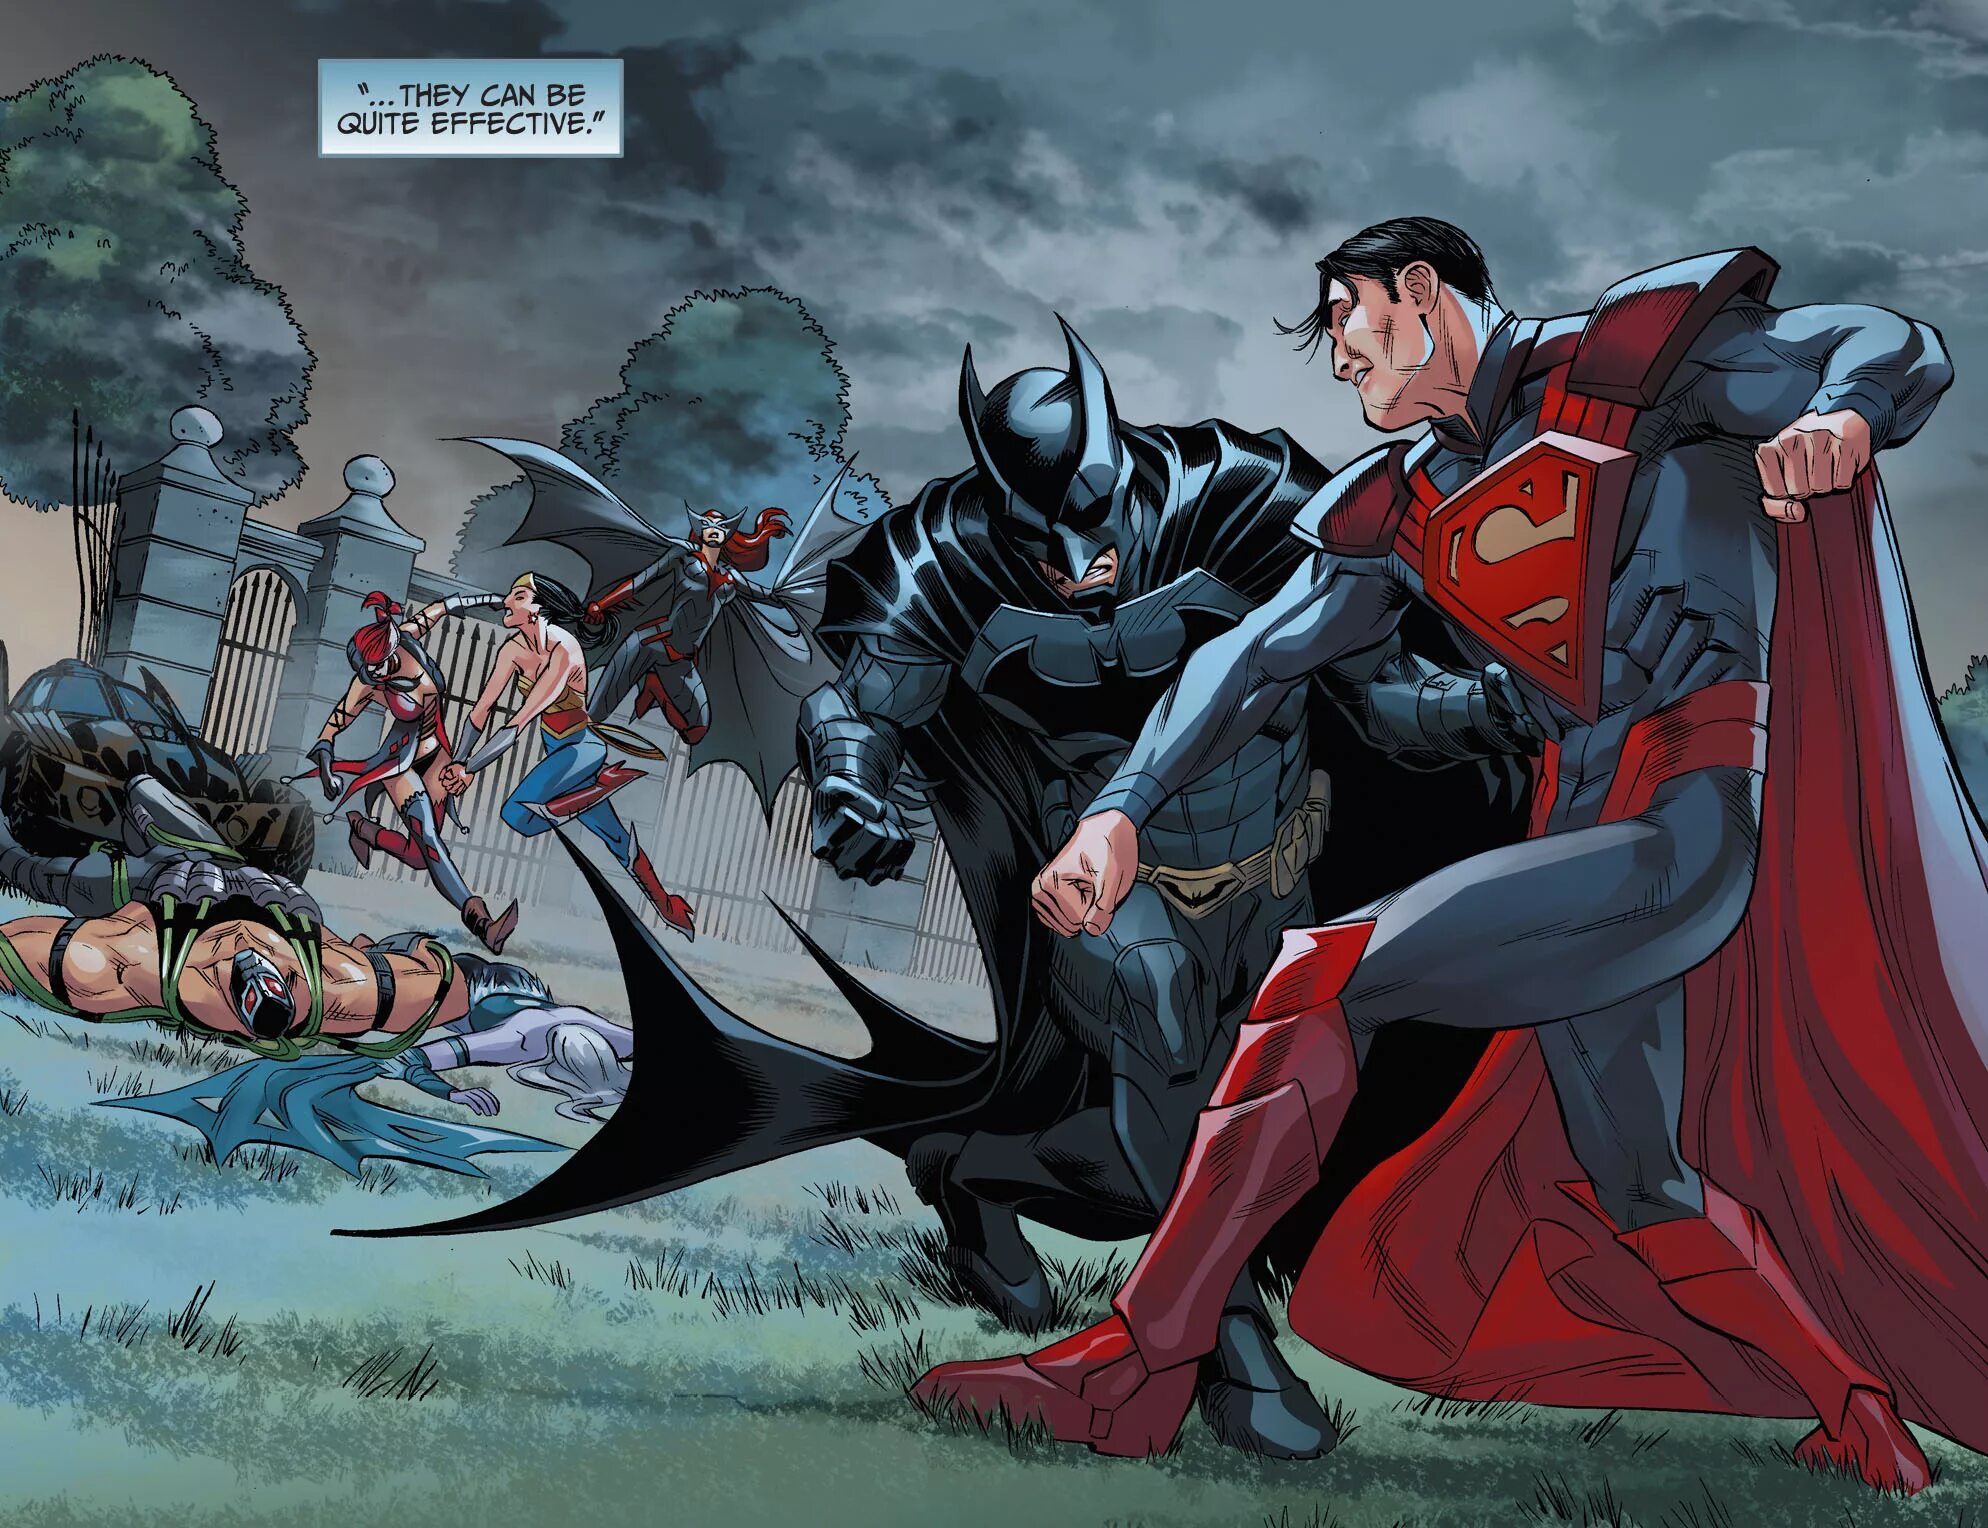 Injustice Gods among us Бэтмен. Супермен против Супермена Инджастис. Инджастис 1 Супермен. Injustice Gods among us Бэтмен vs Супермен.